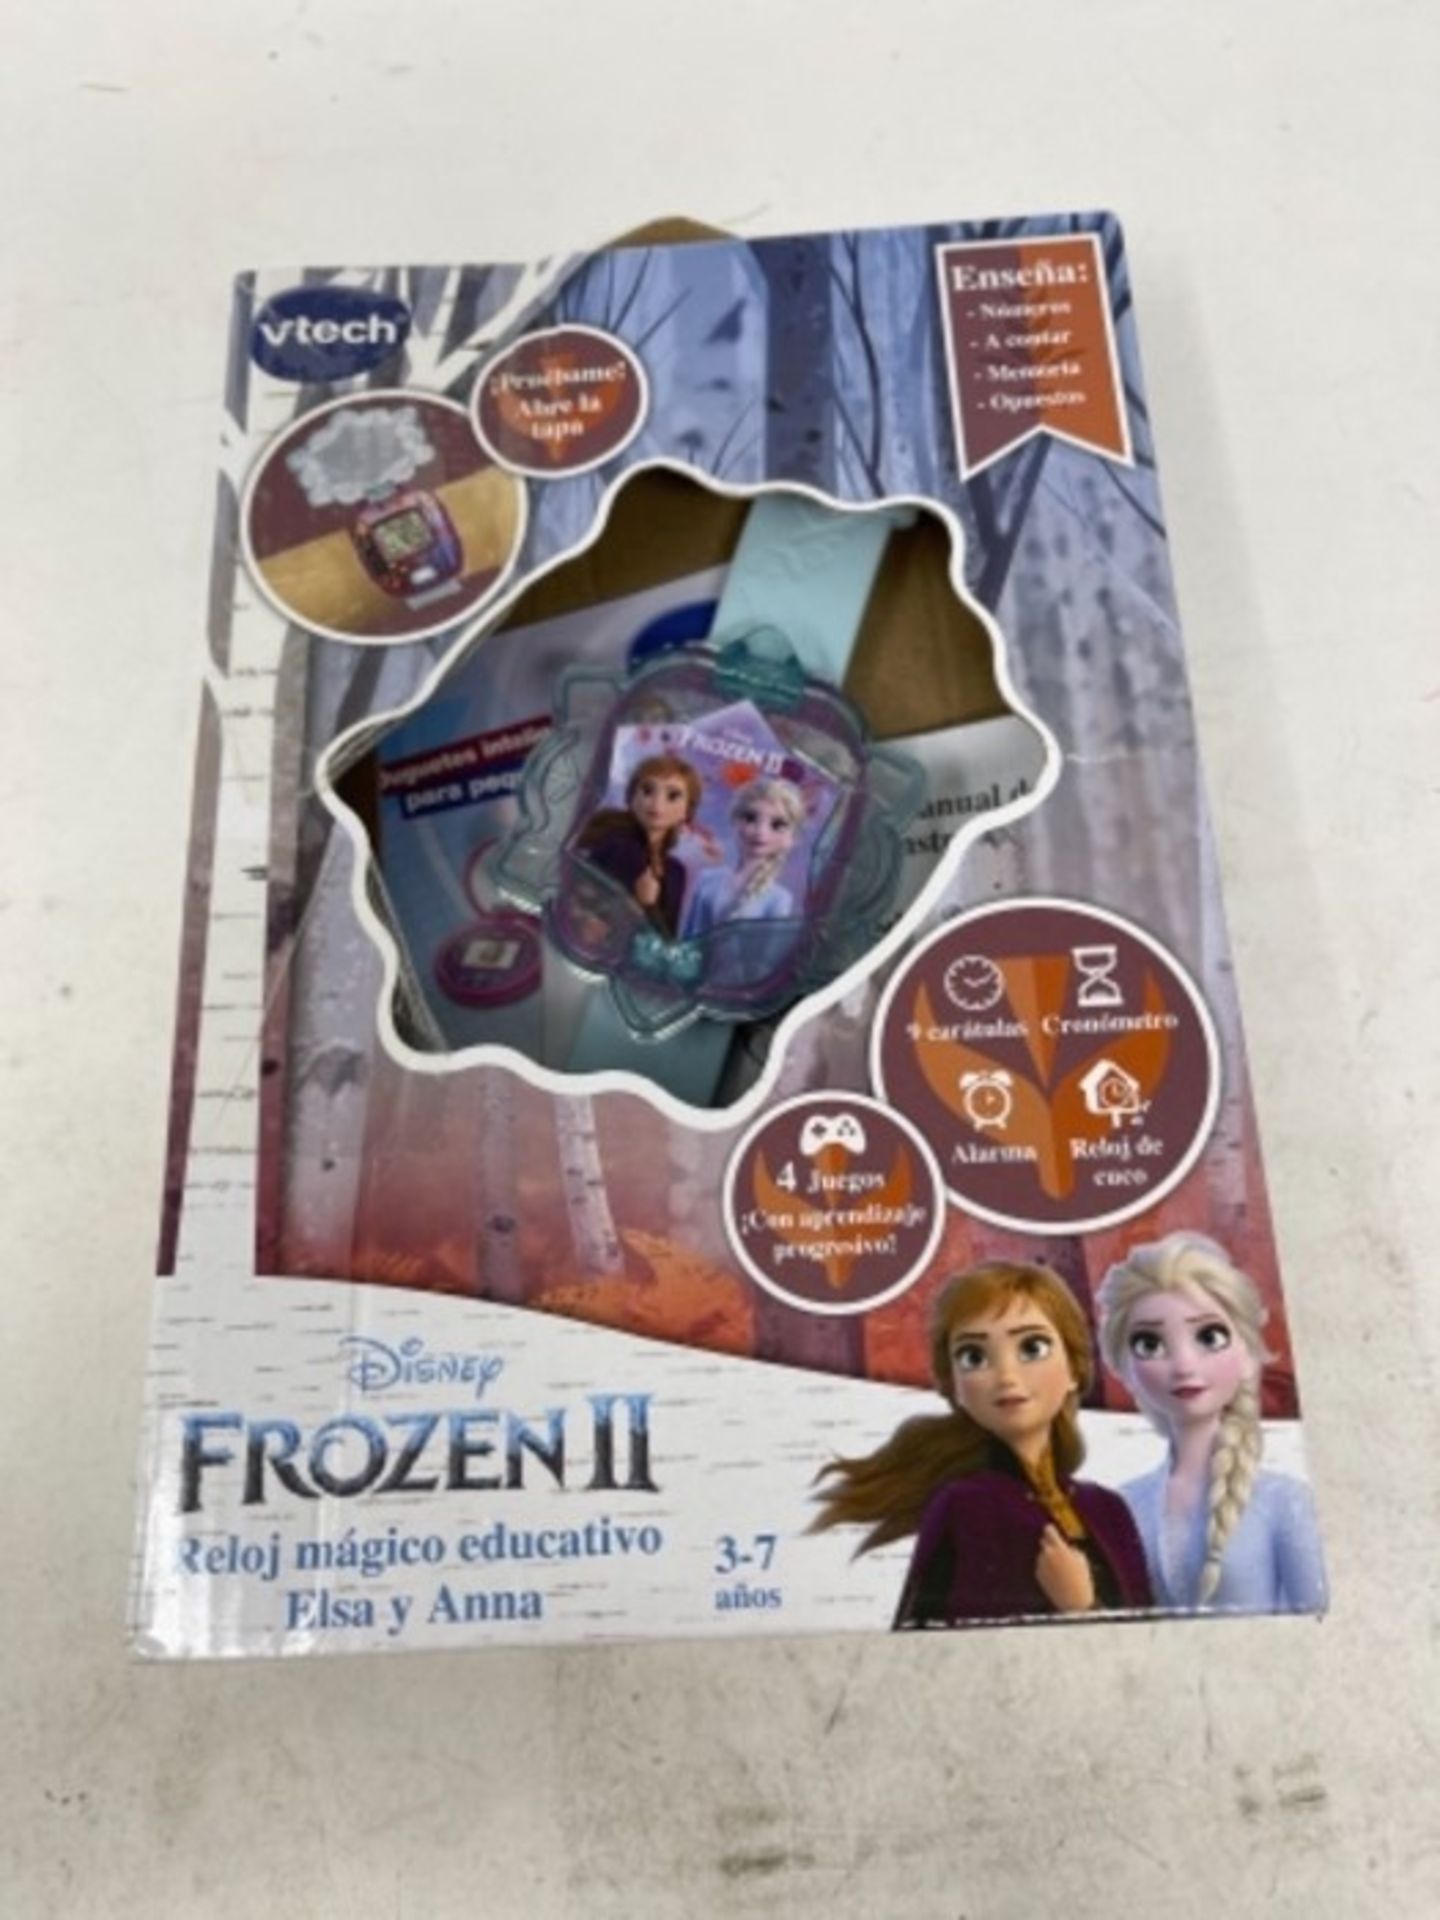 VTech Frozen 2 Digital Watch (Anna and Elsa). 3480-518822 - Spanish version - Image 2 of 3